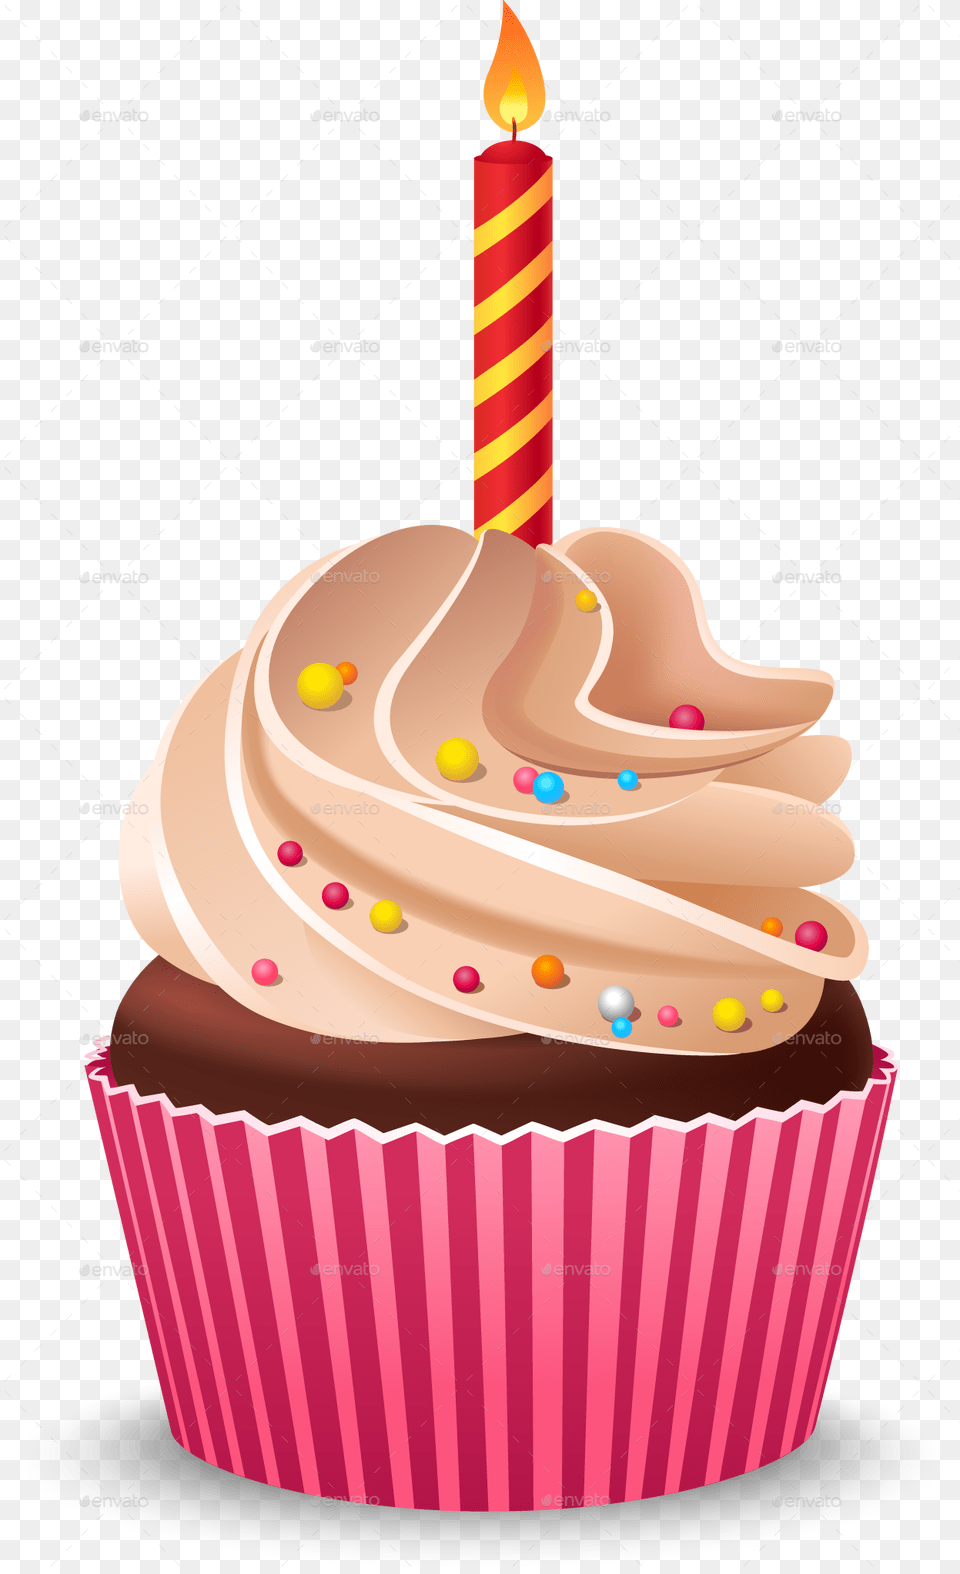 Cupcake Birthday Cake Cream Muffin Birthday Cupcake Transparent Background, Dessert, Birthday Cake, Food, Icing Png Image